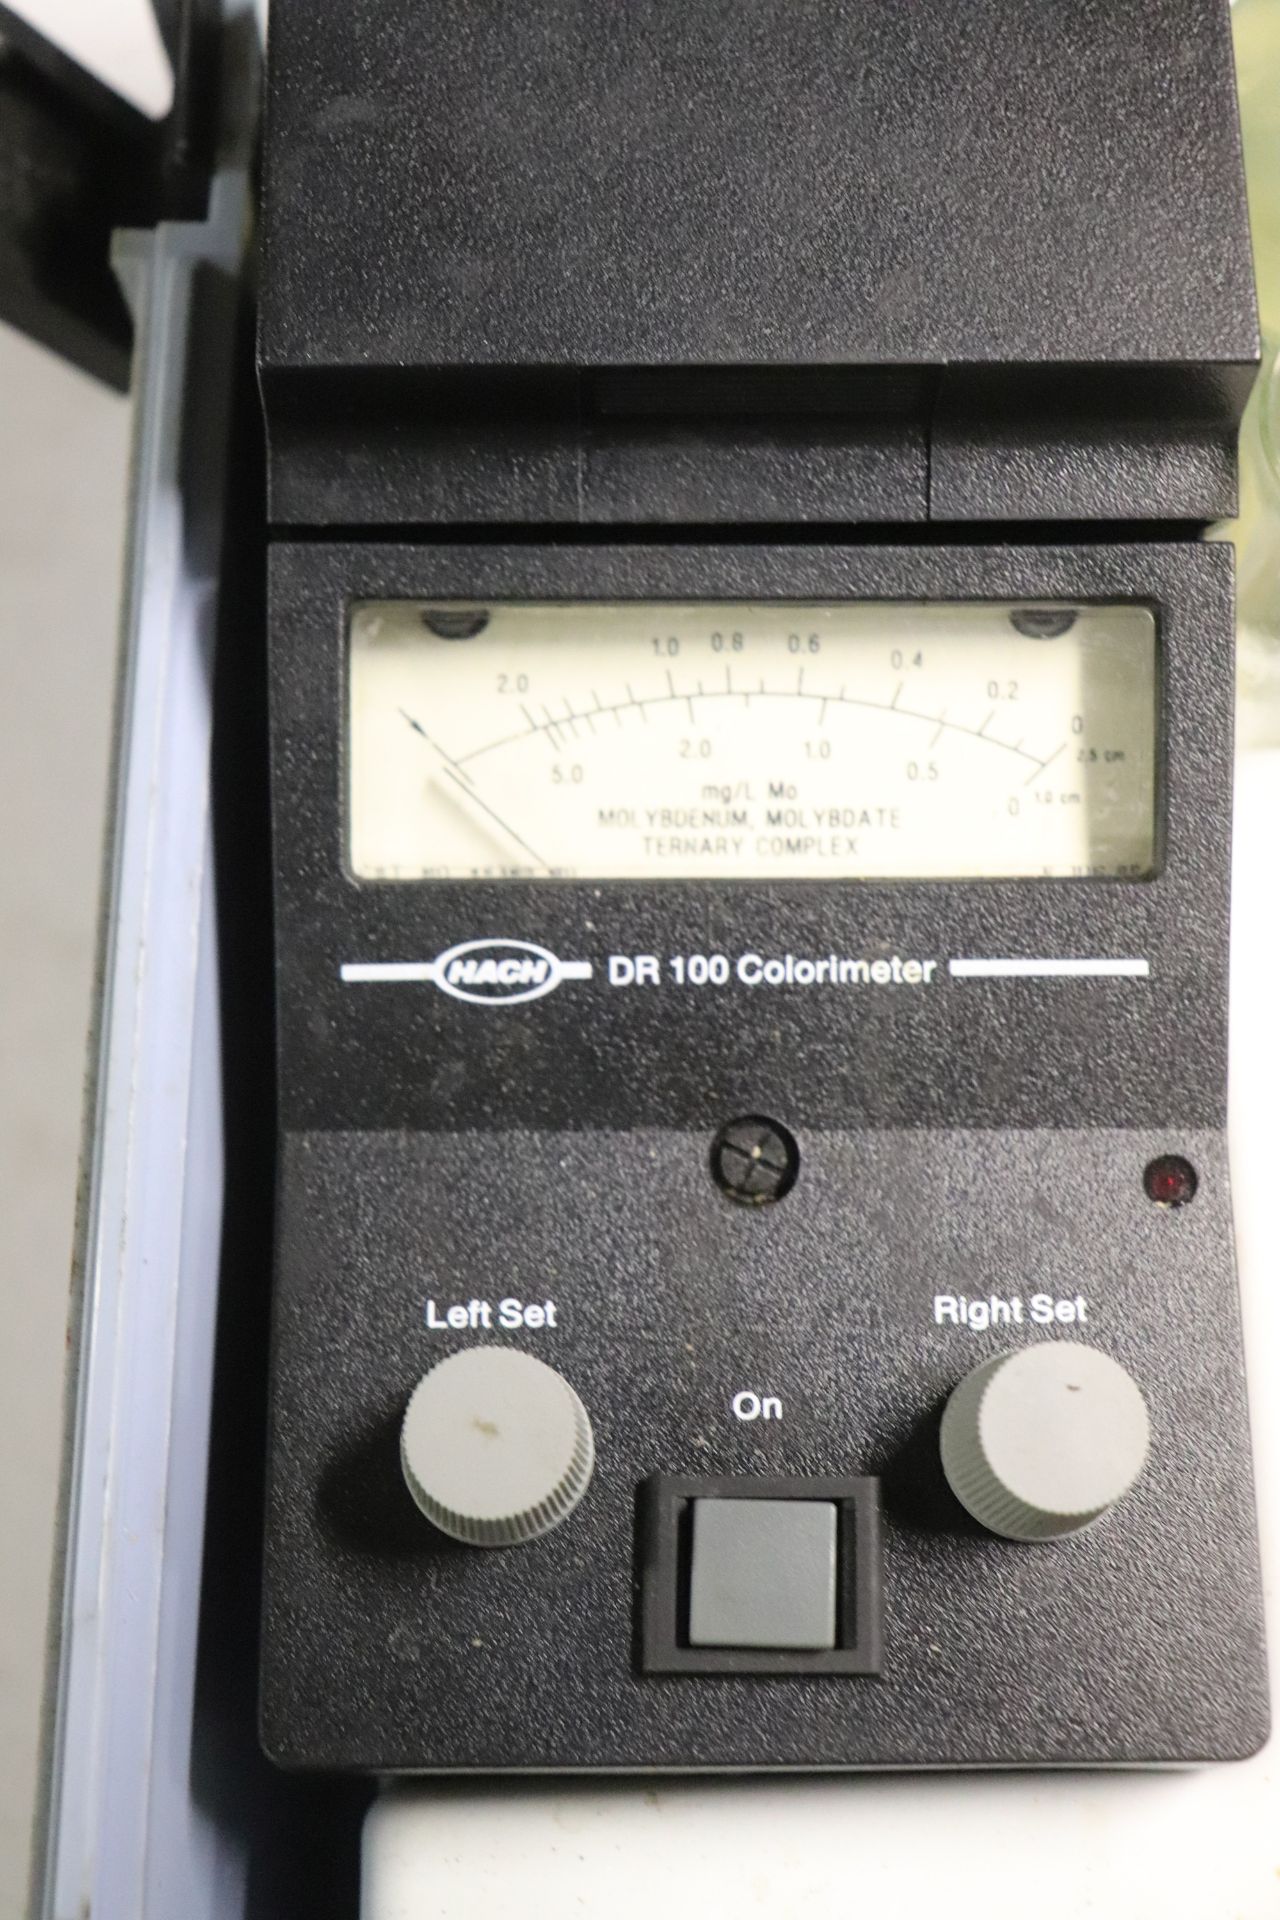 Hatch DR100 Colorimeter - Image 2 of 4